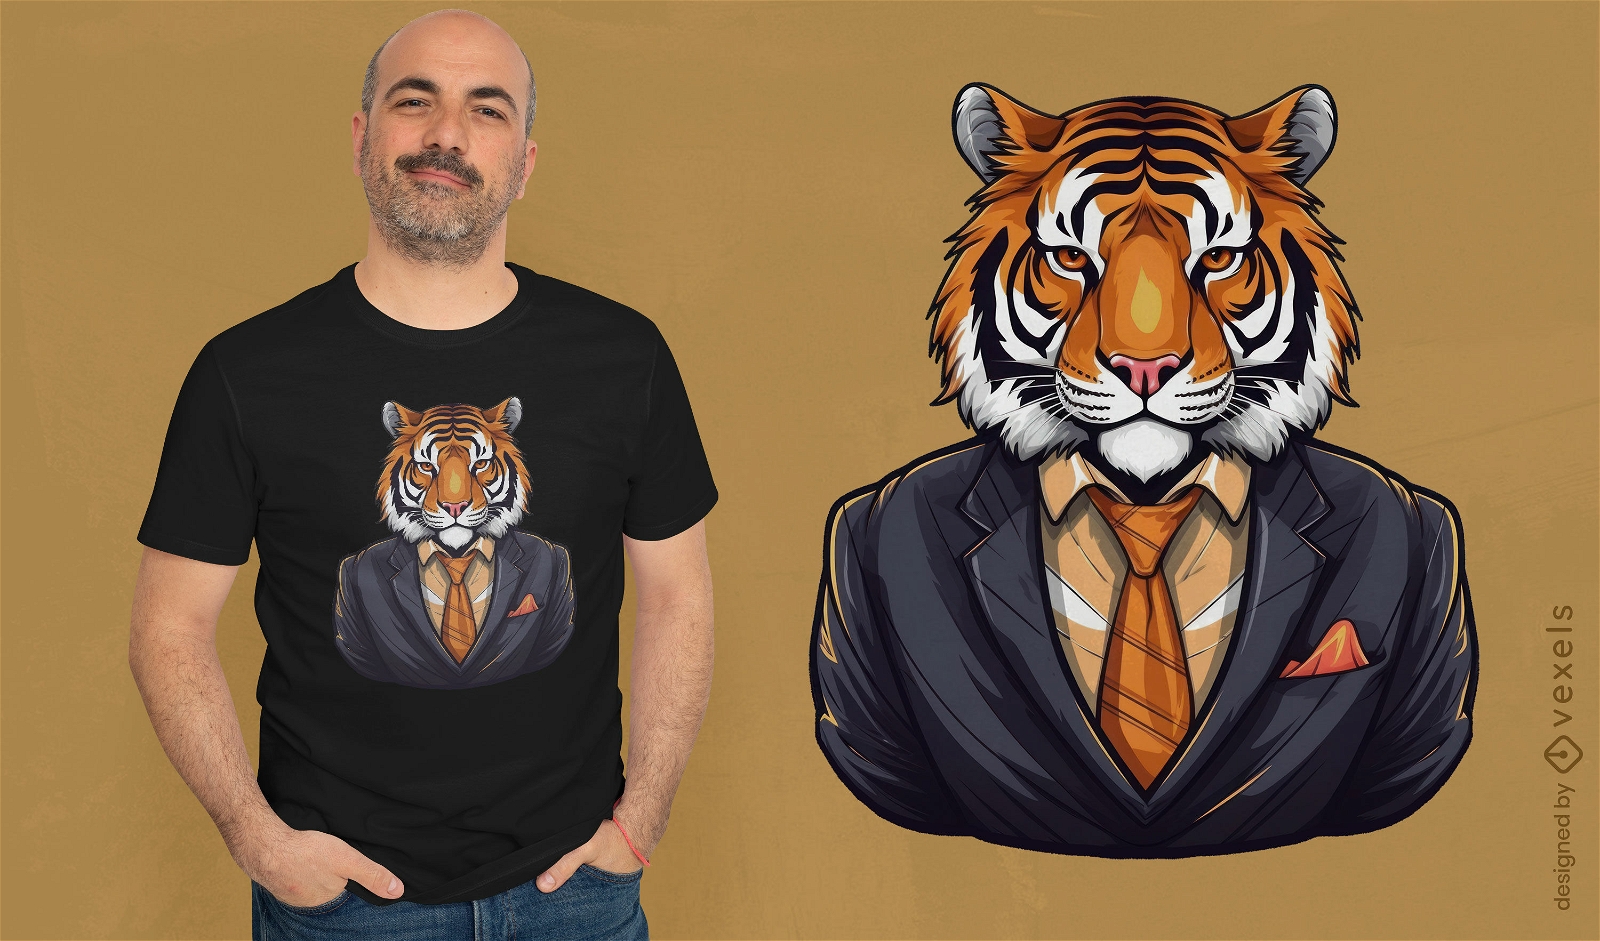 Diseño de camiseta de tigre adecuado.